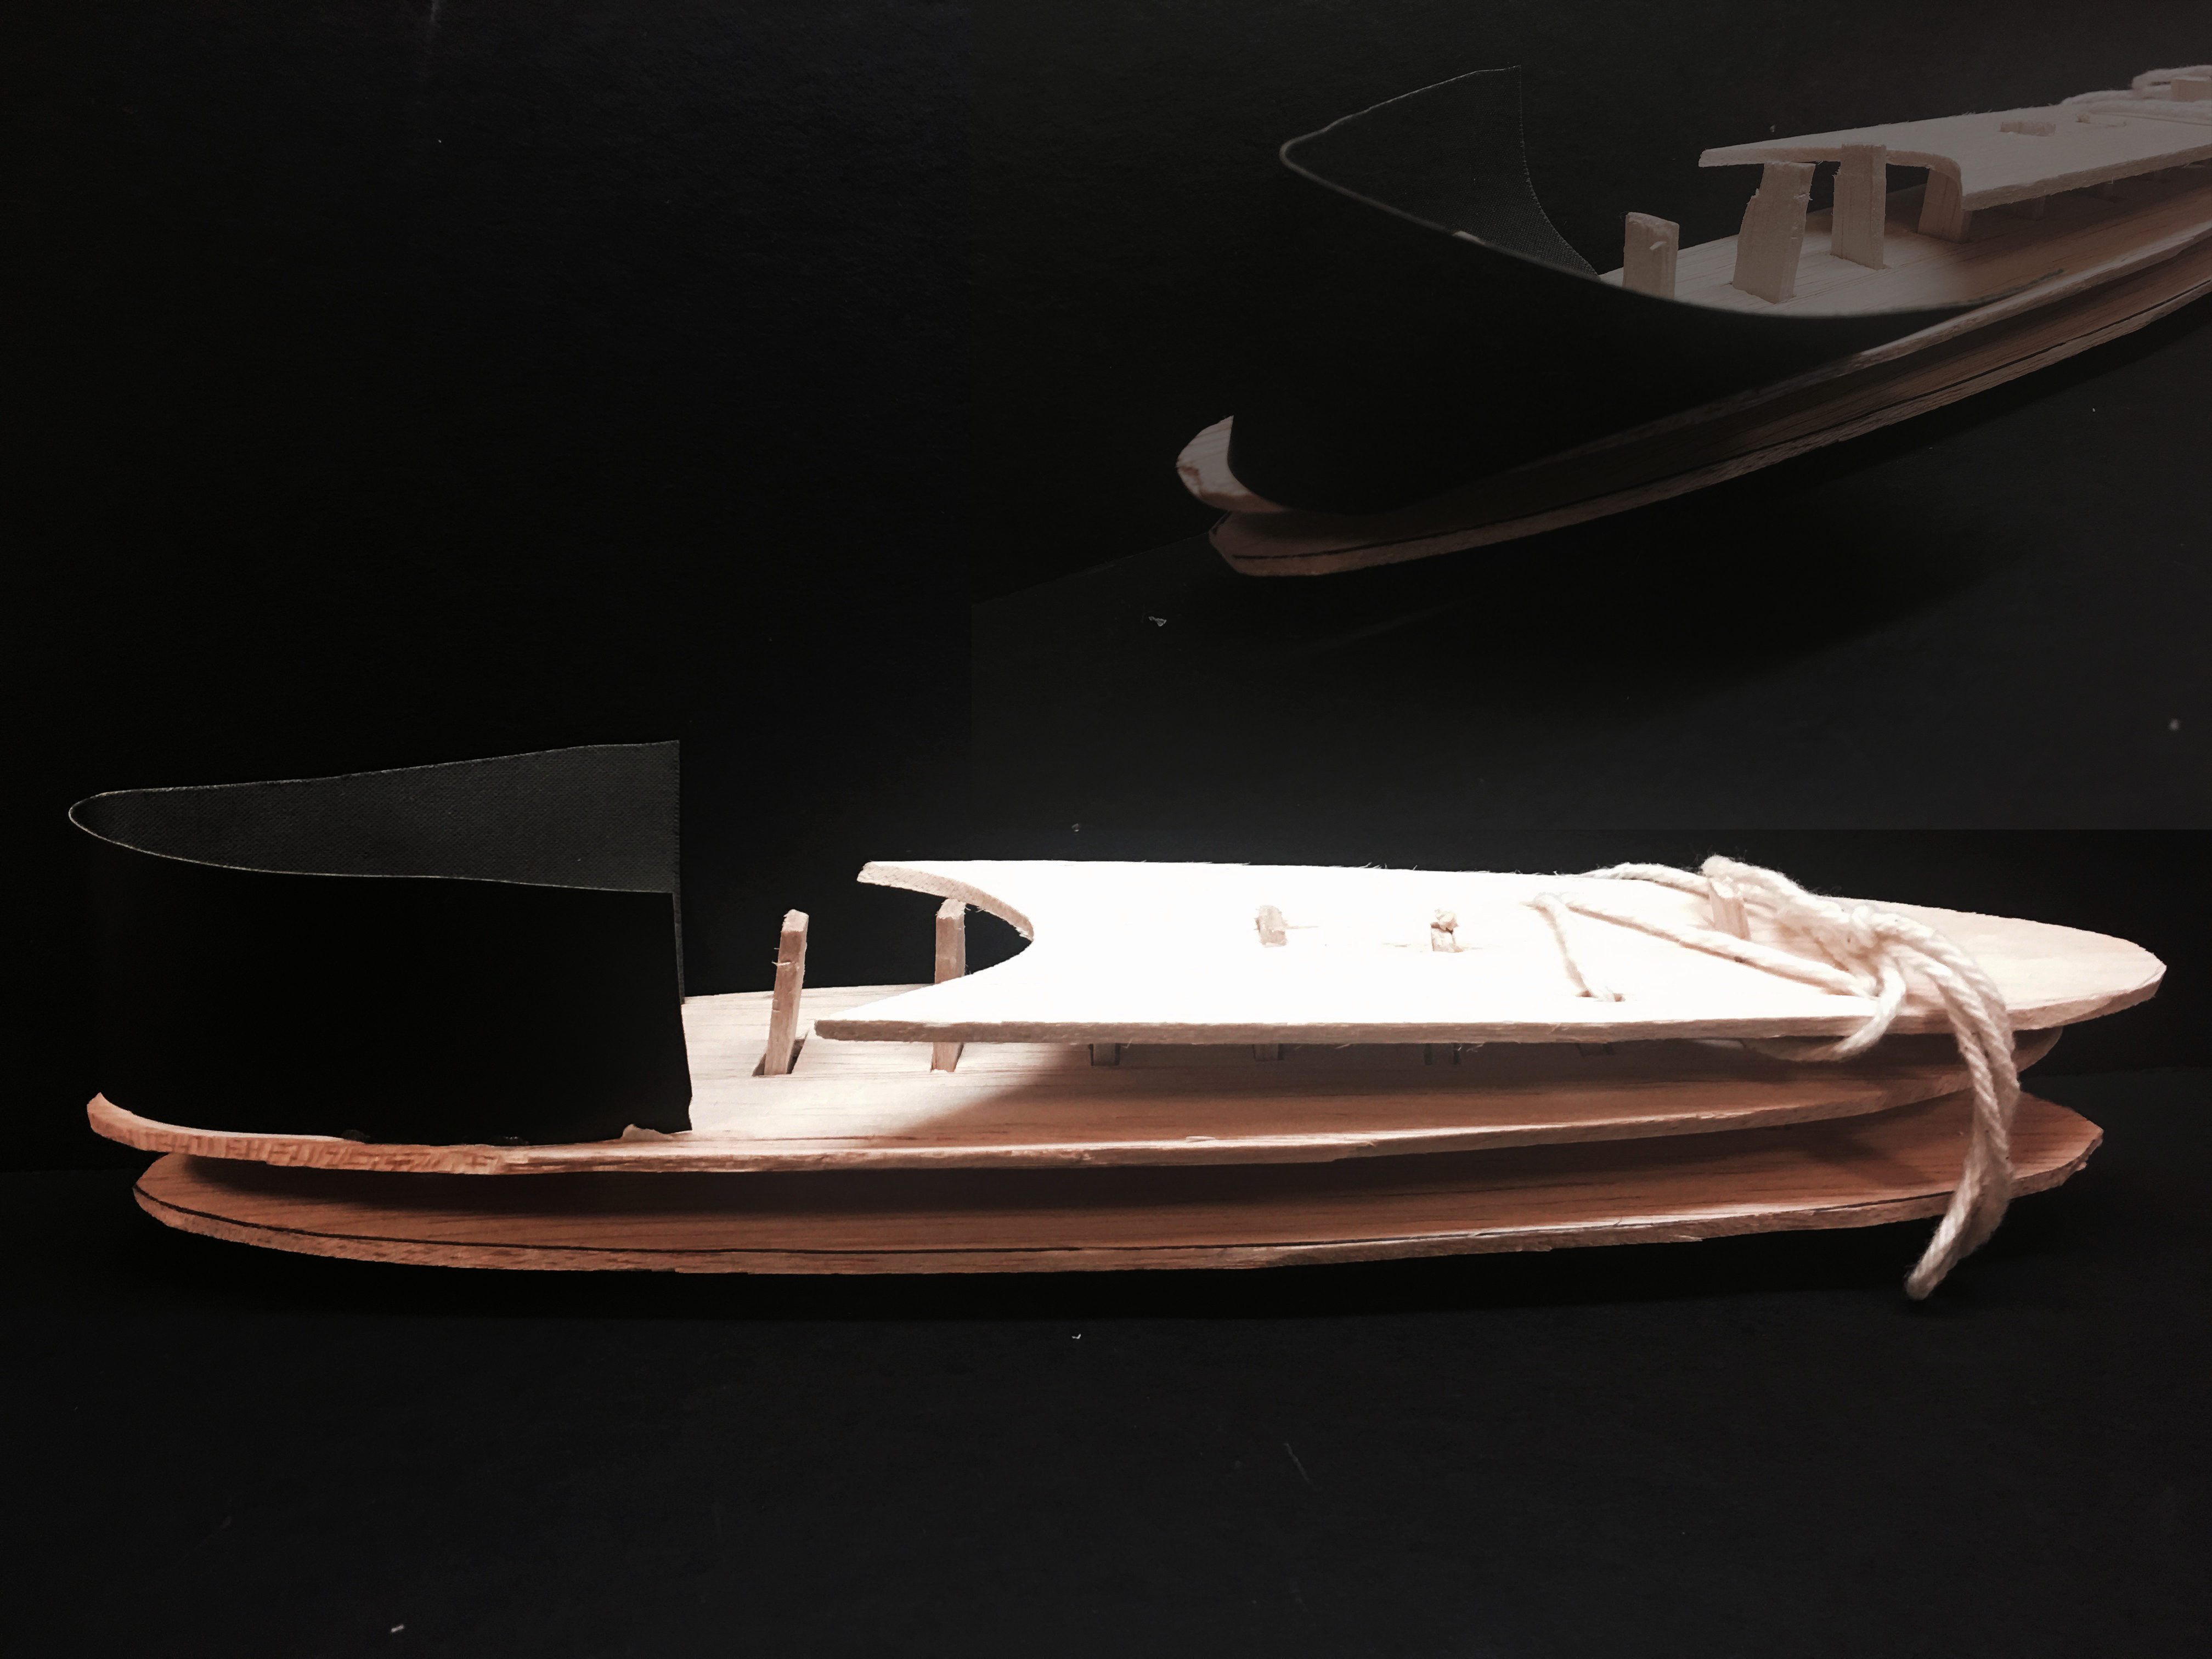 A fantasy boat shoe design